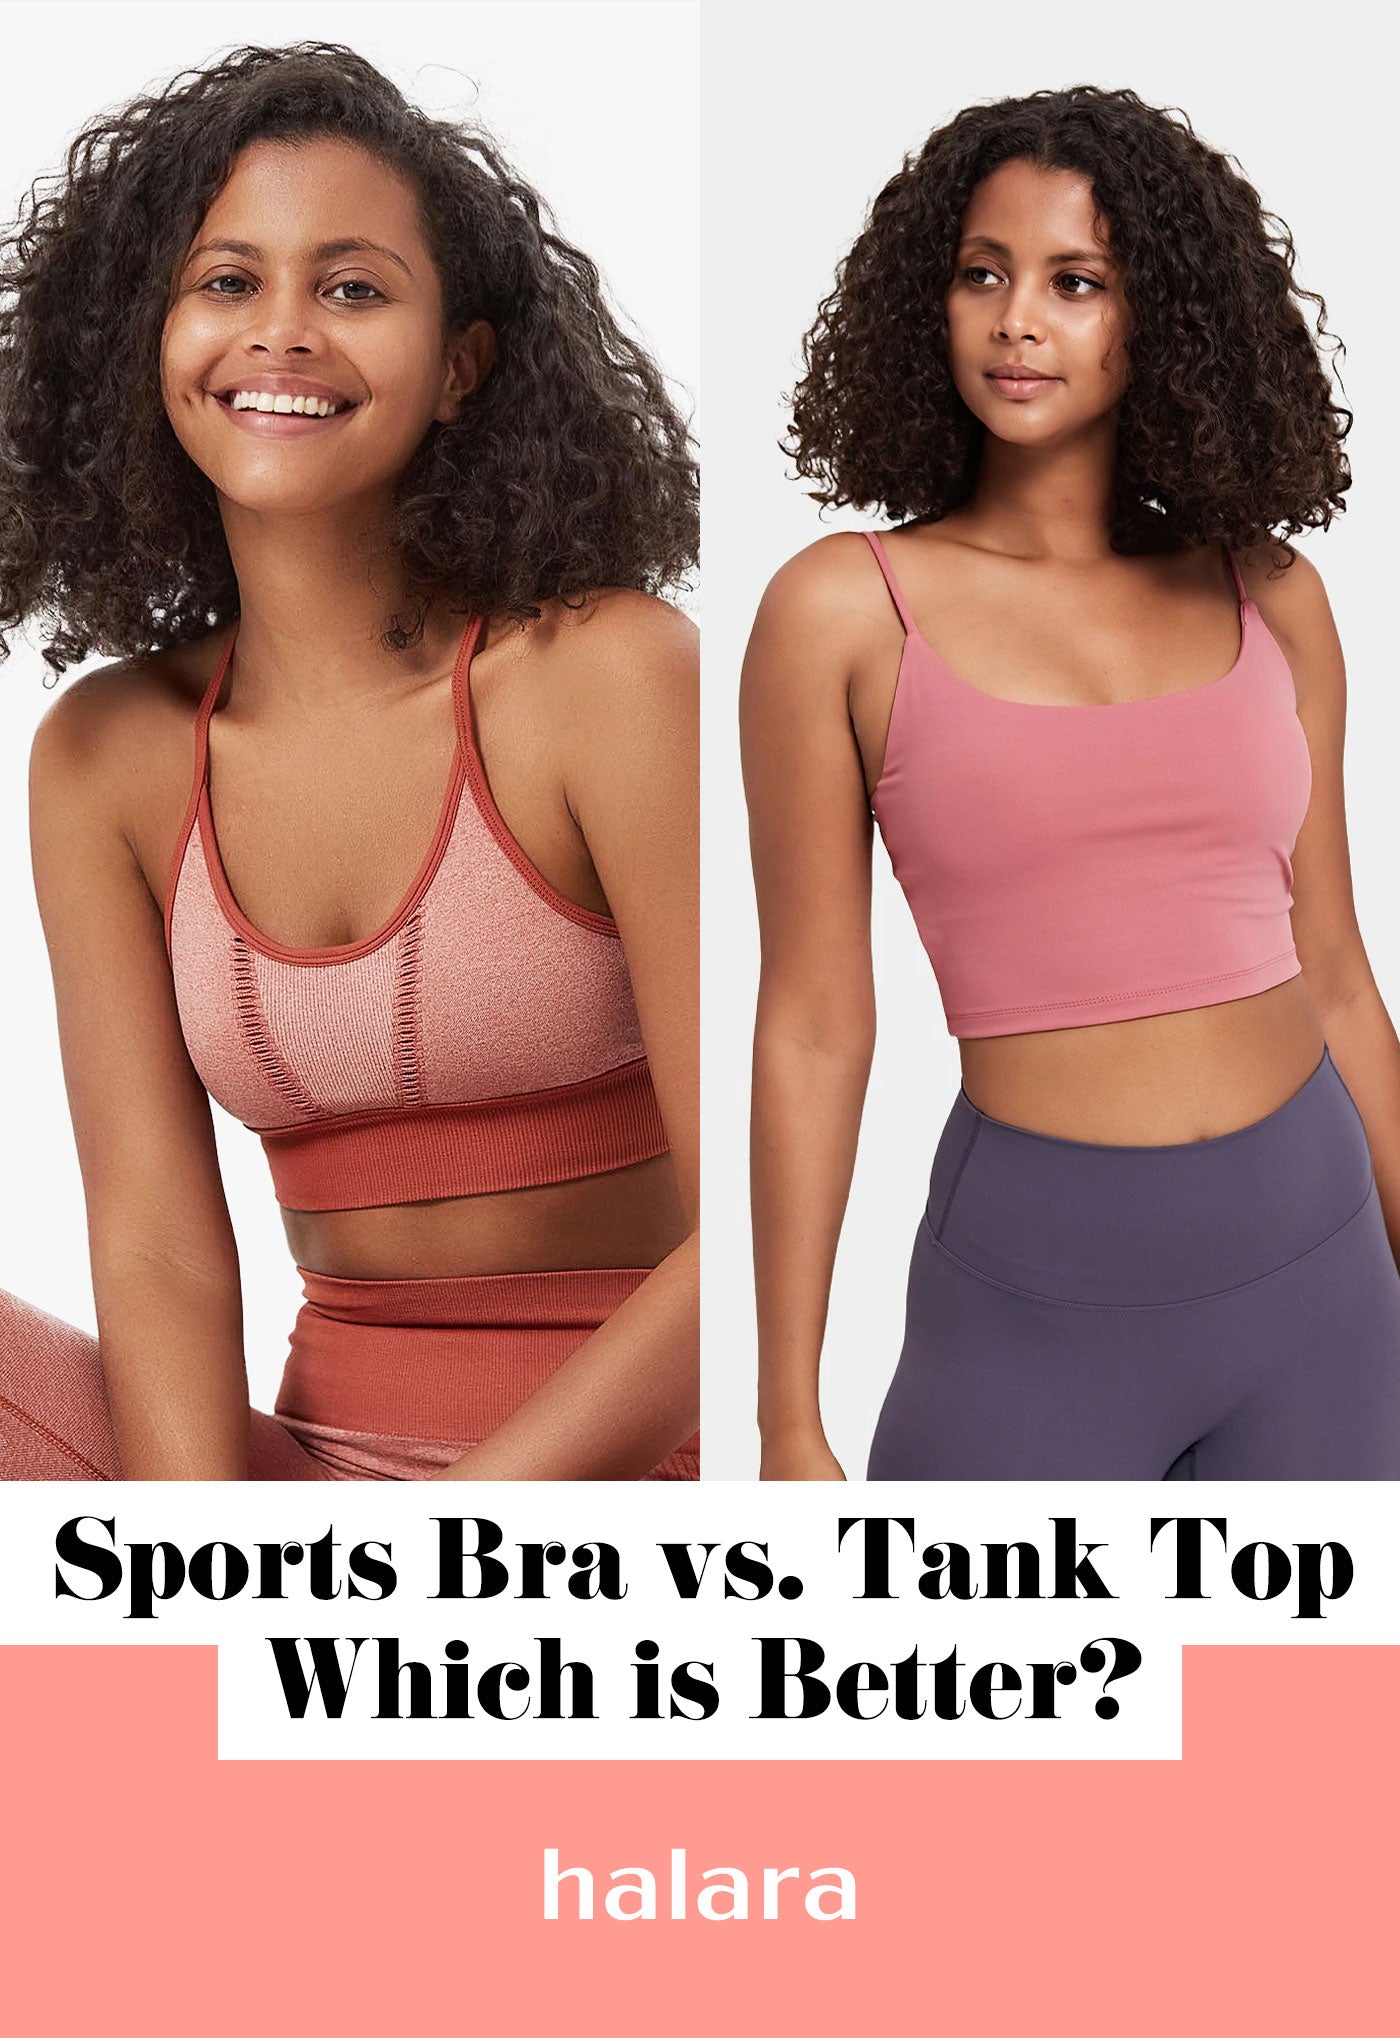 Sports Bra vs. Tank Top: Which is Better?